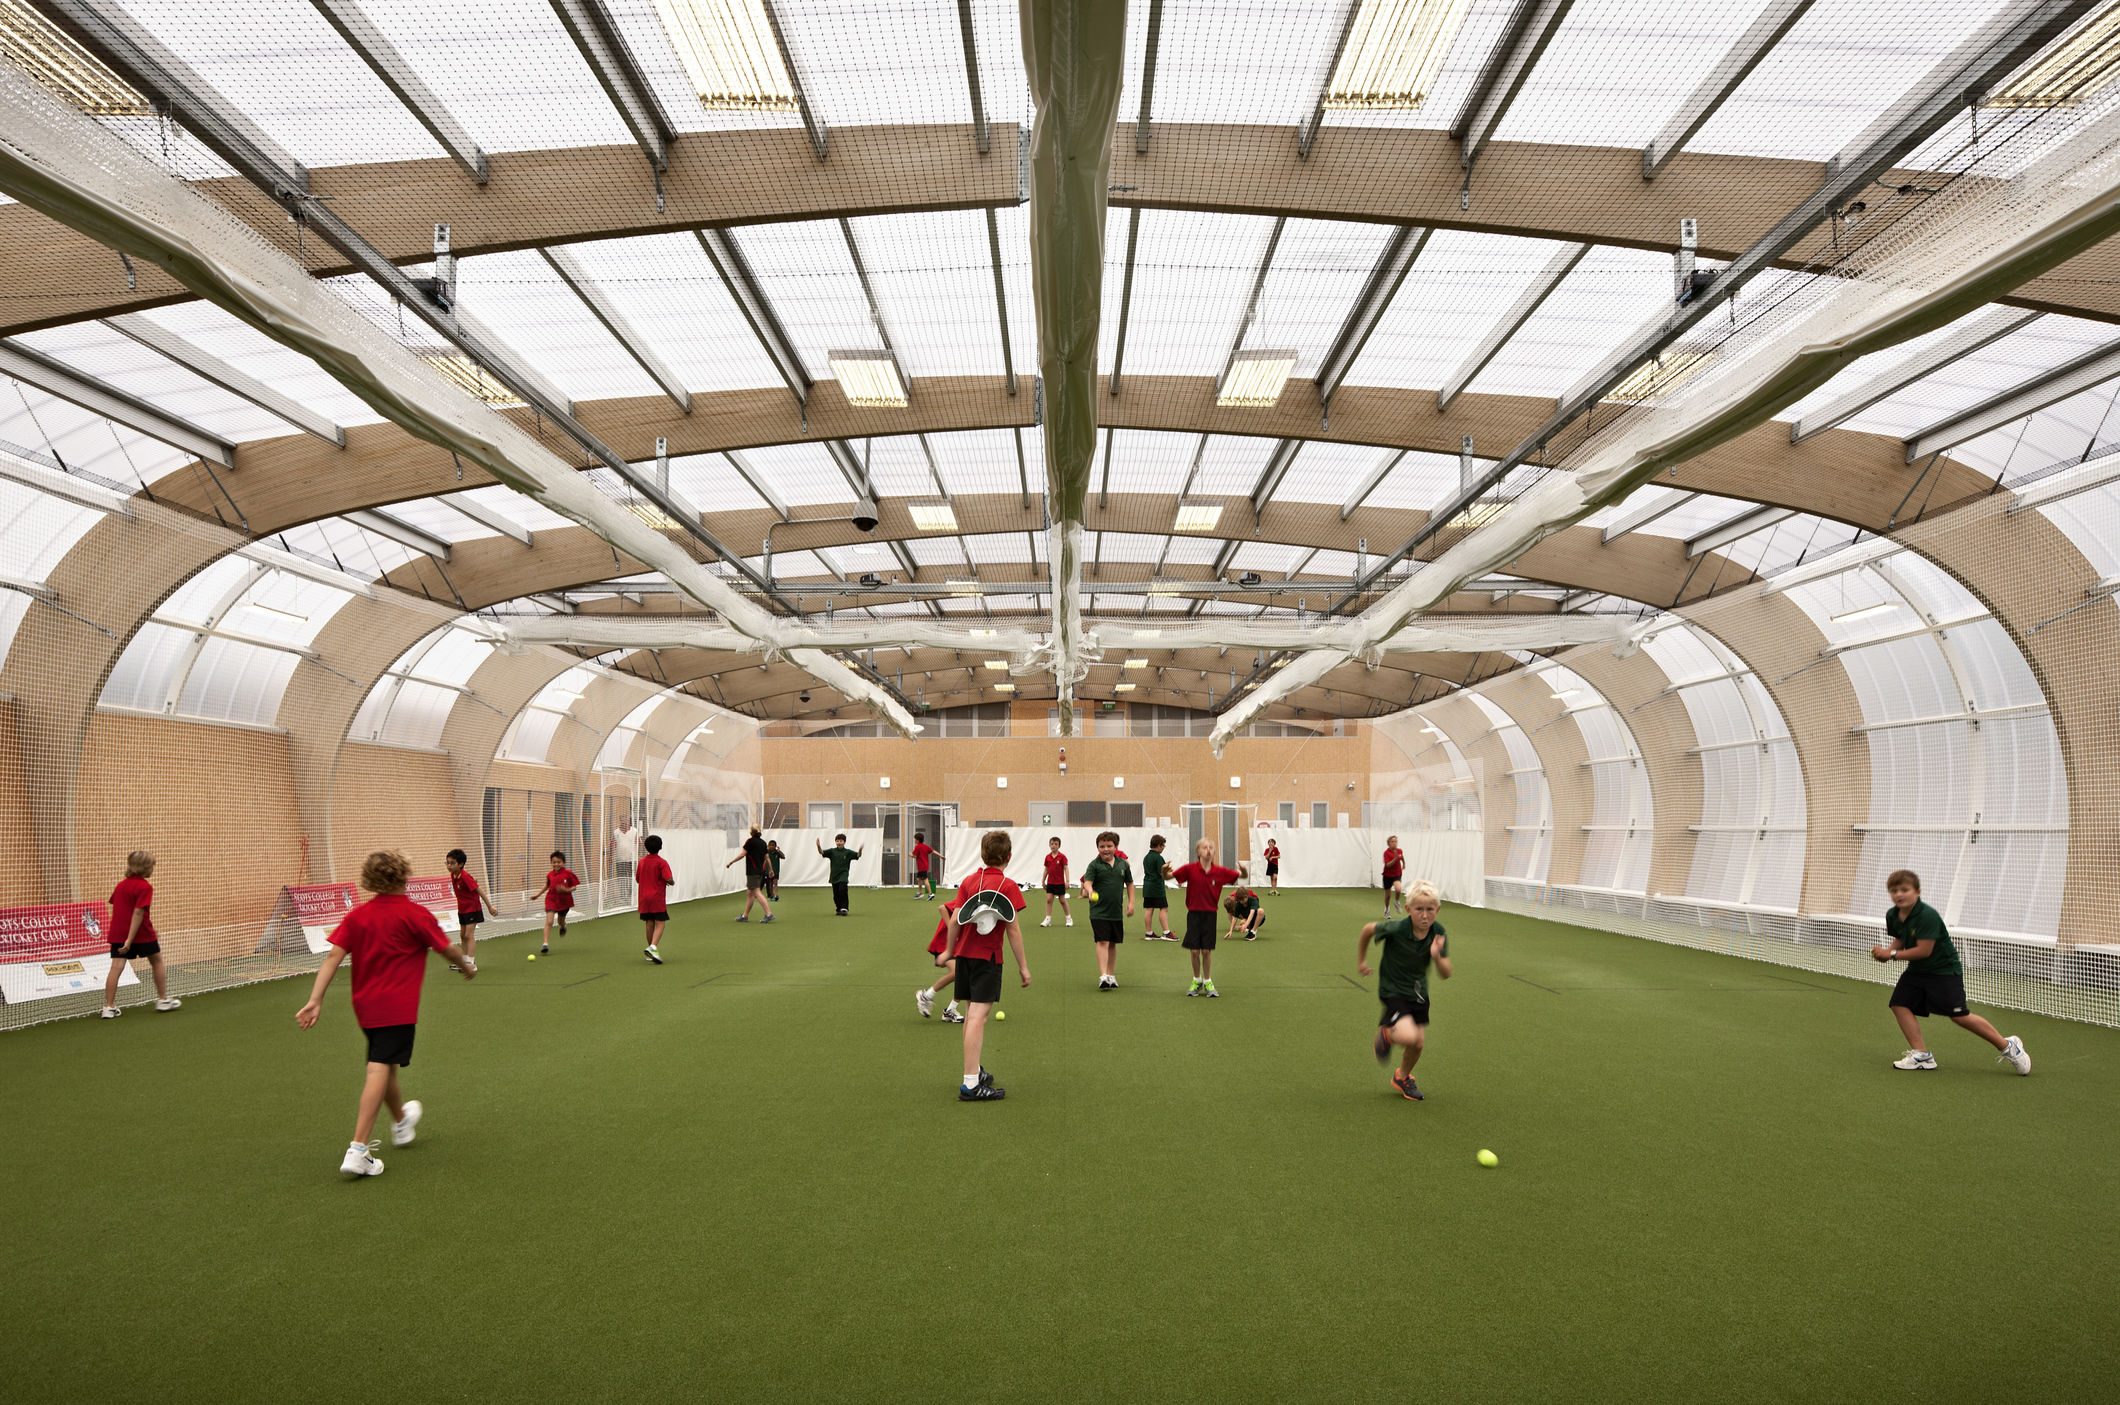 Scots College
Hodge Sports Centre